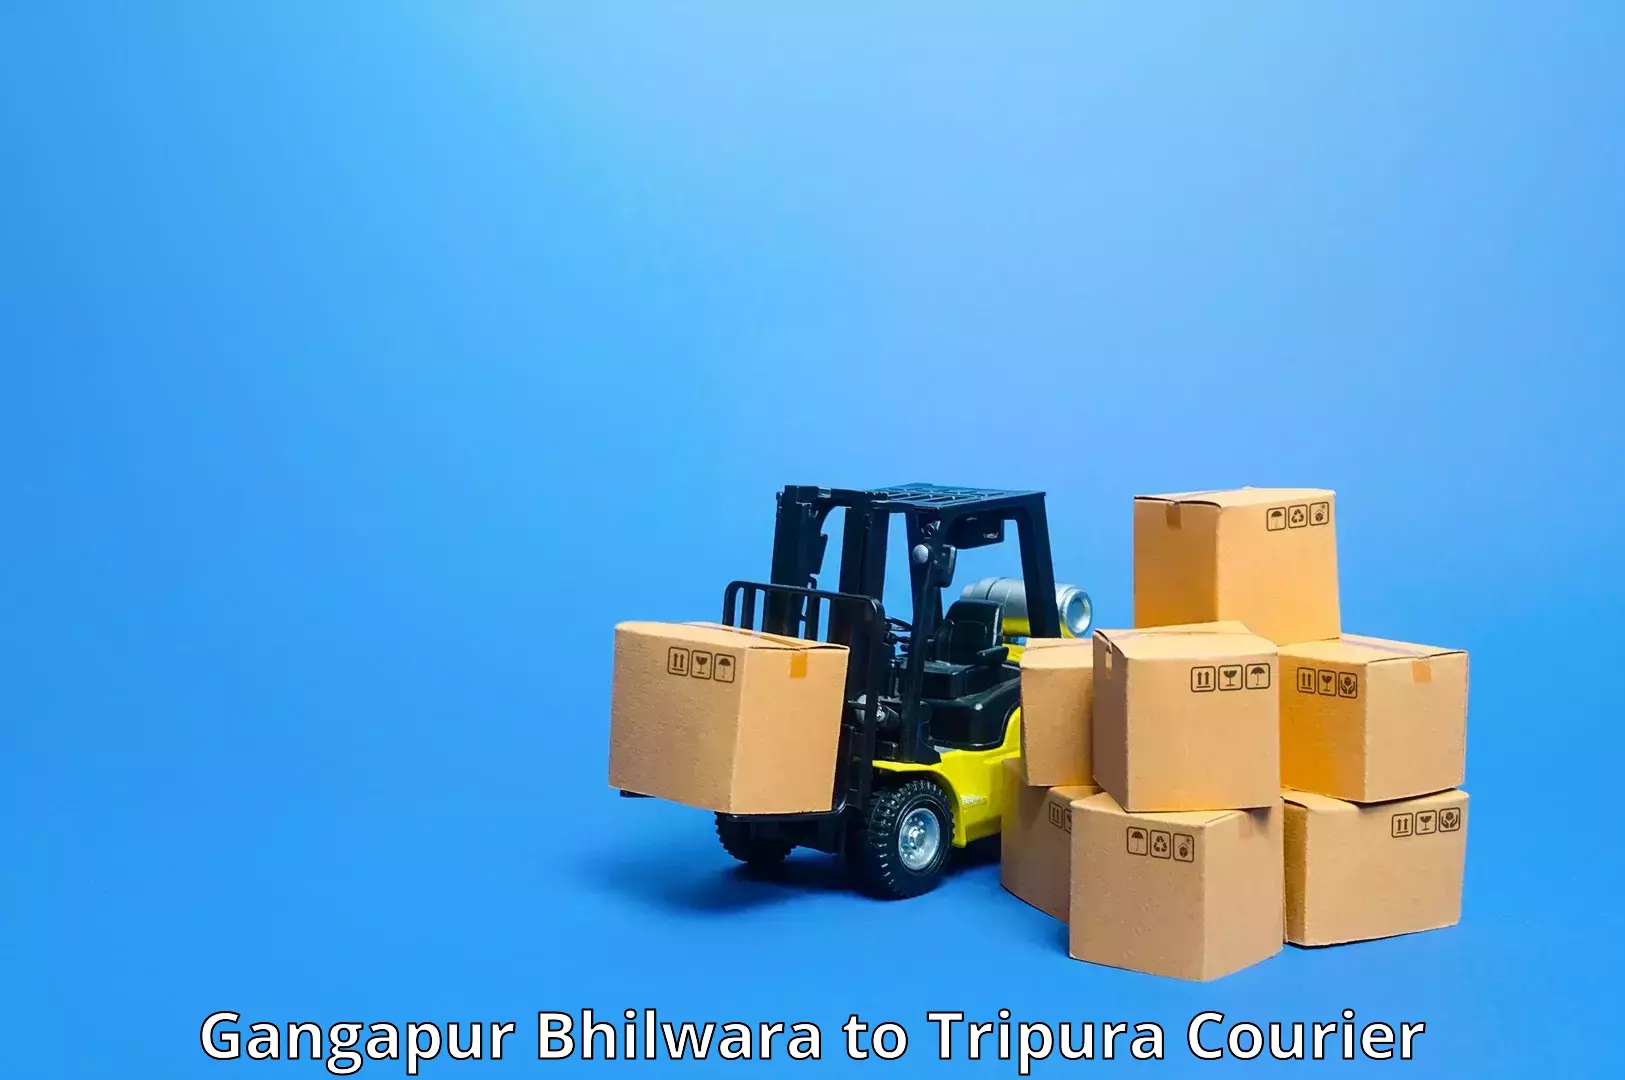 24/7 courier service in Gangapur Bhilwara to Tripura